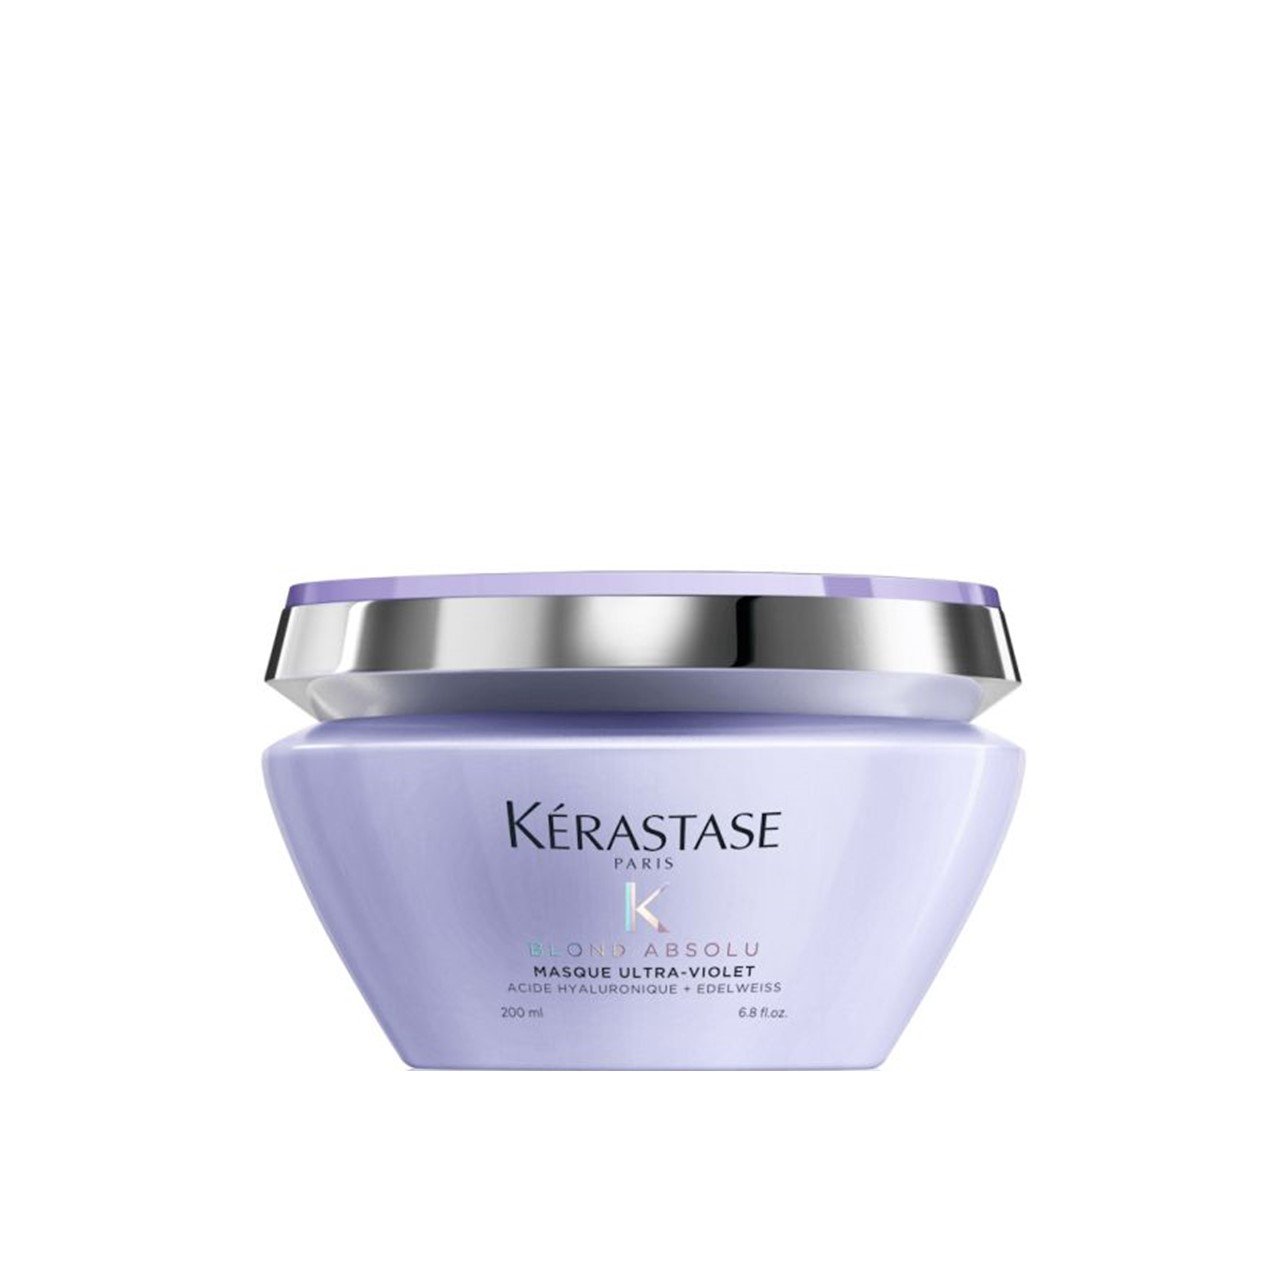 Kérastase Blond Absolu Masque Ultra-Violet Hair Mask 200ml (6.76fl oz)